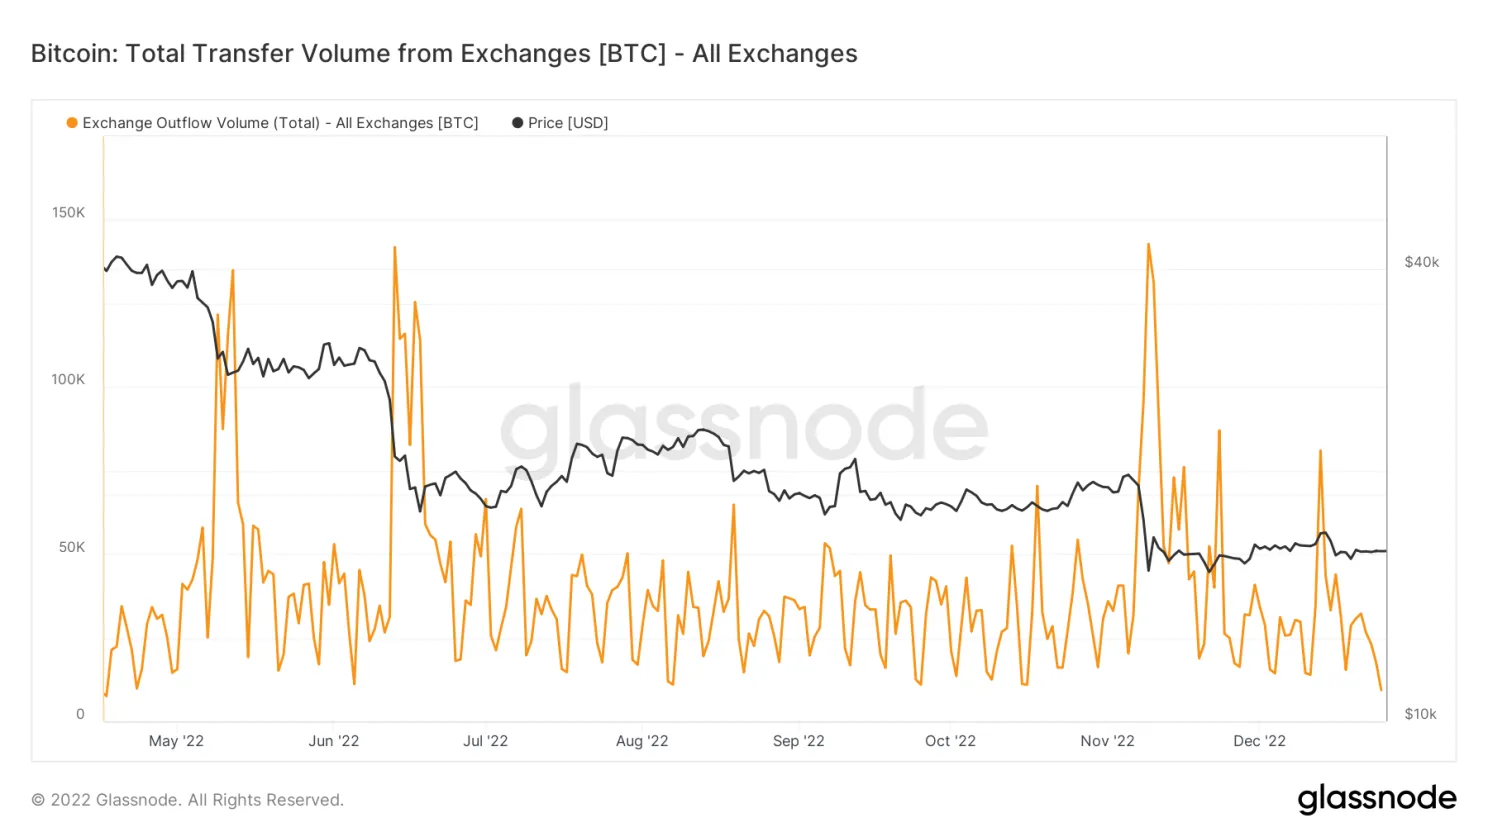 Bitcoin opnames sterk afgenomen kort na FTX-crisis